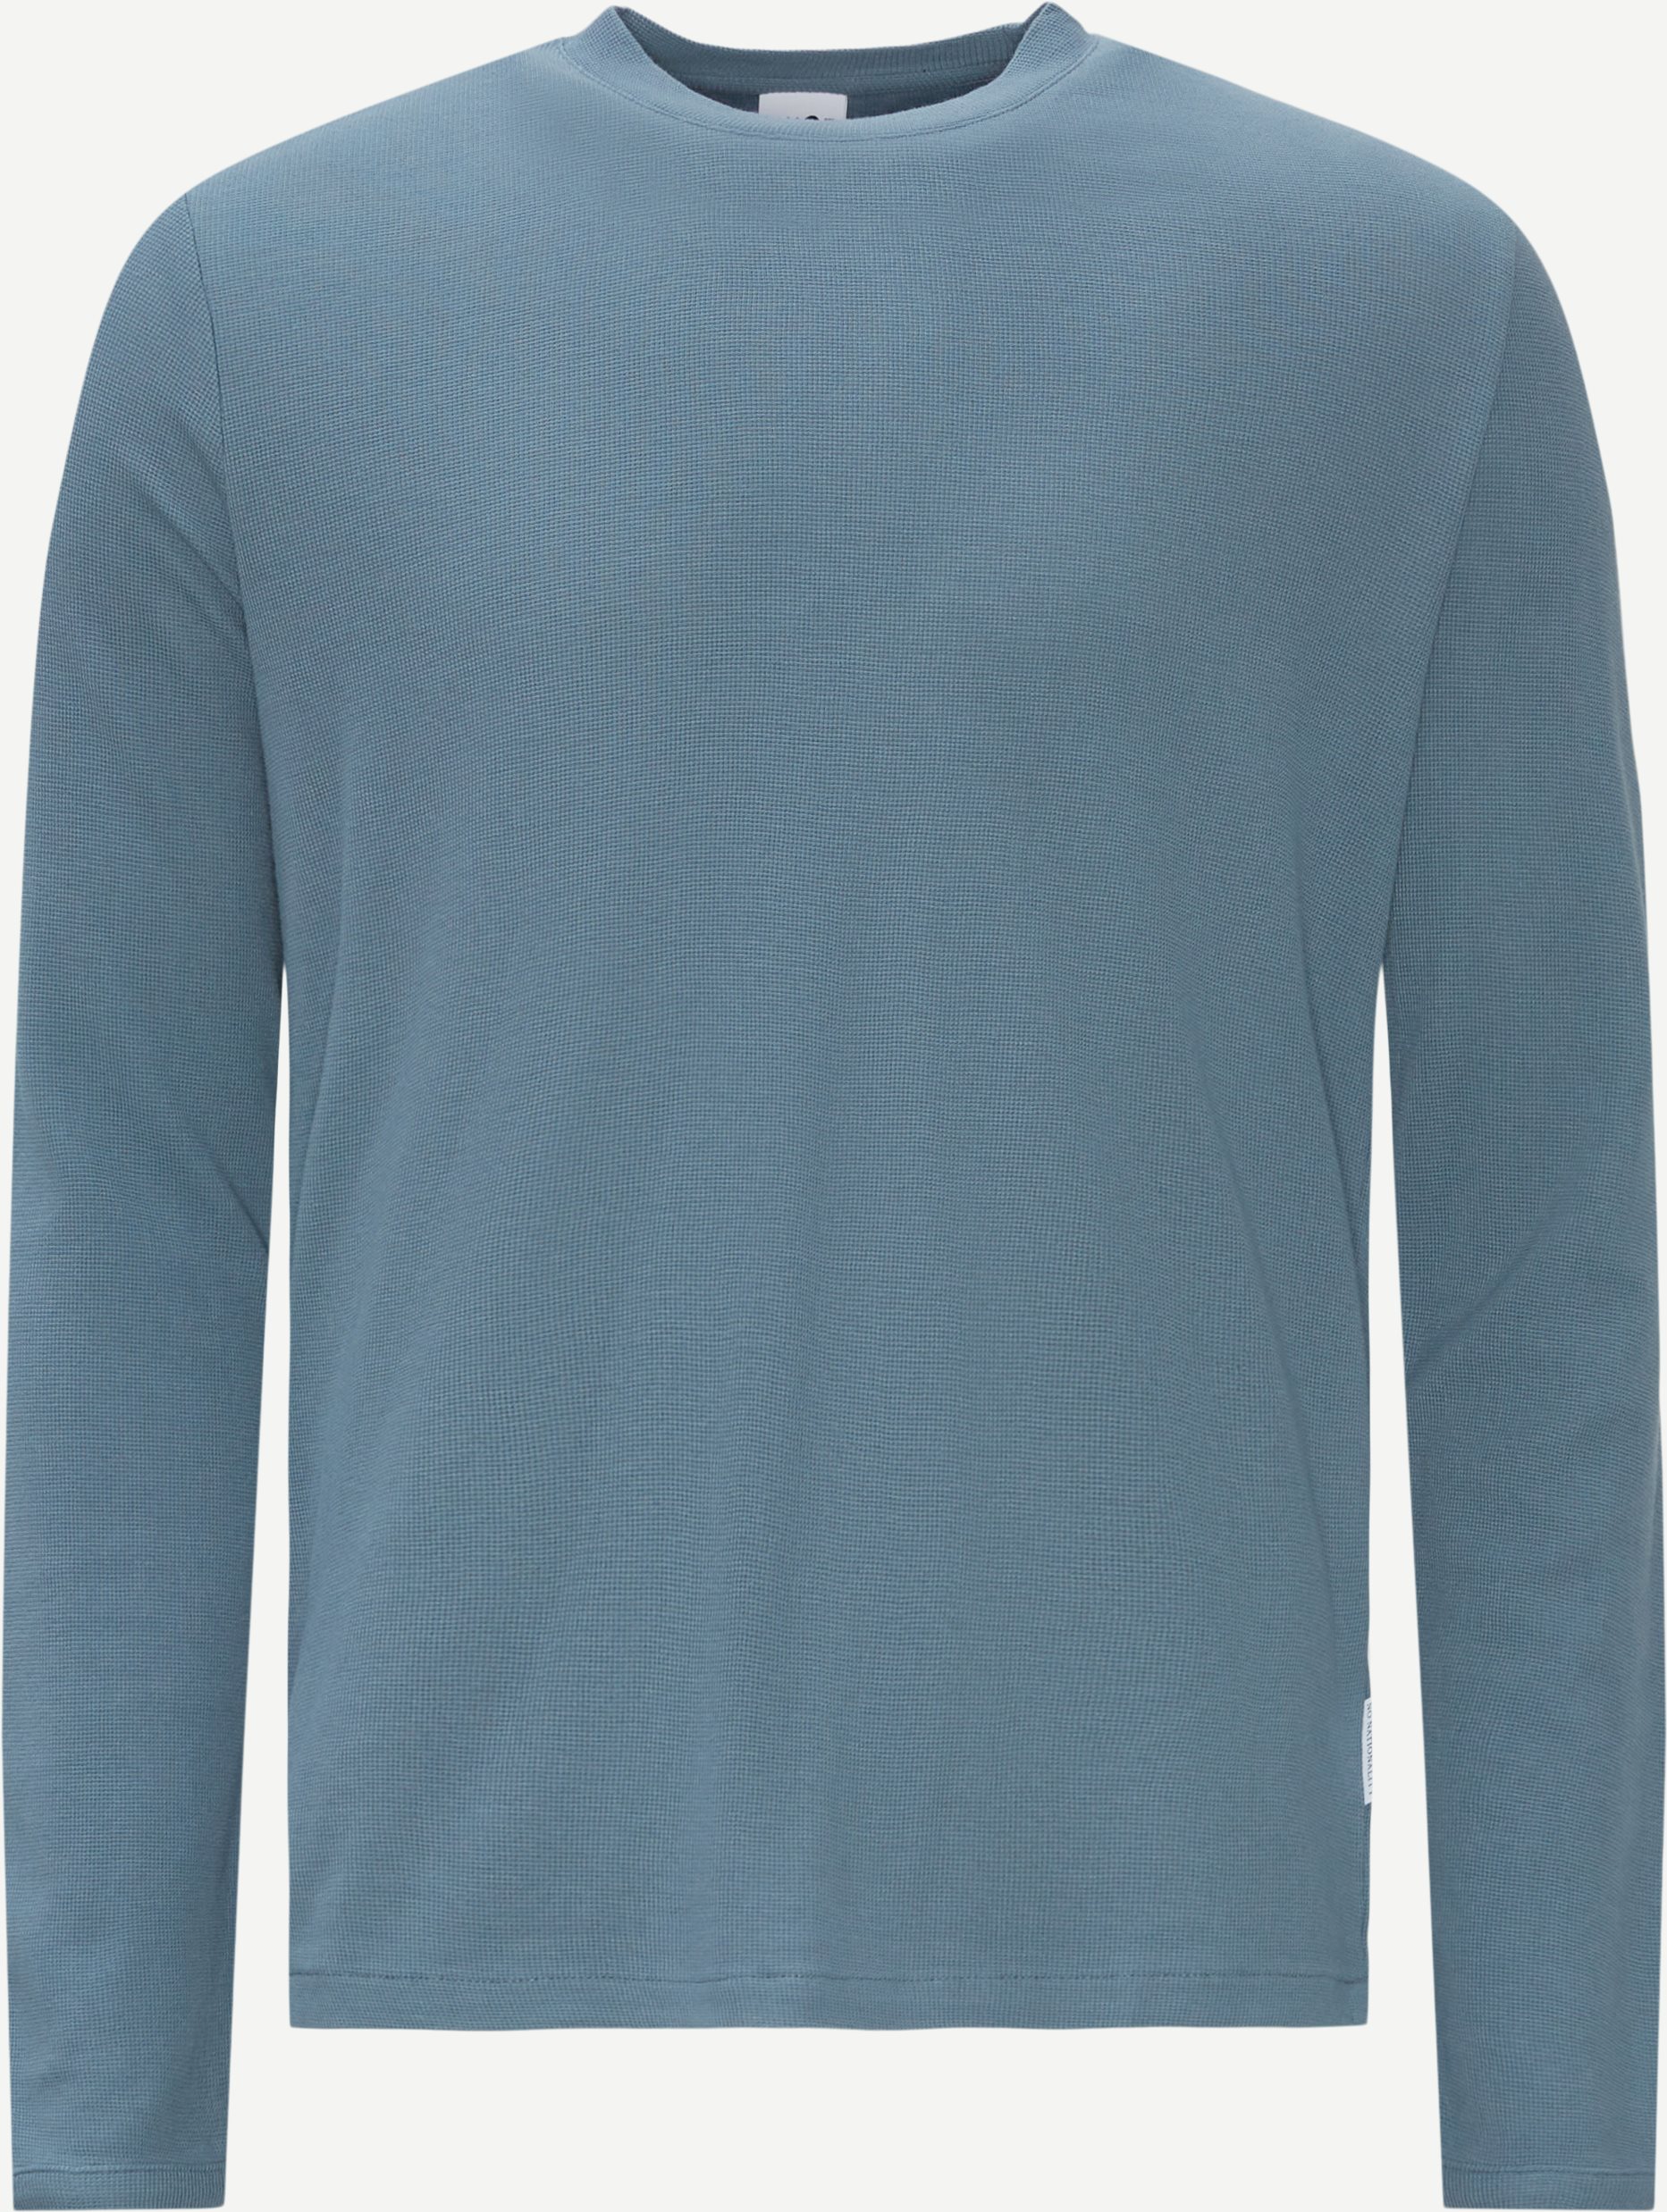 3323 Clive Long Sleeve Tee - T-shirts - Regular fit - Blå